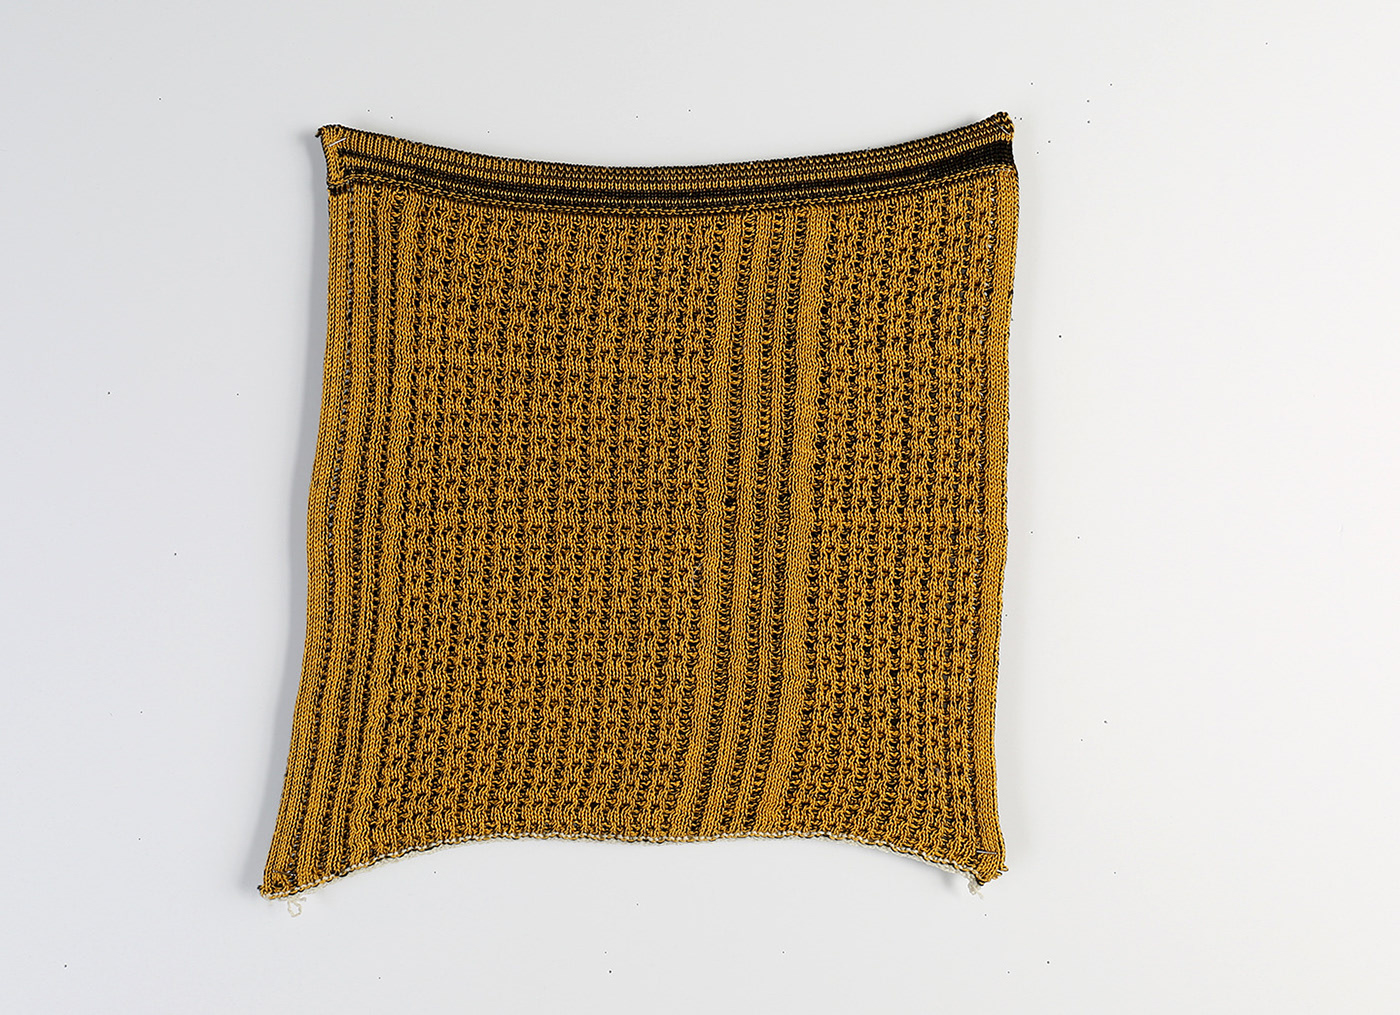 Textiles Wovens knits materials color Yarns apparel interiors risd print